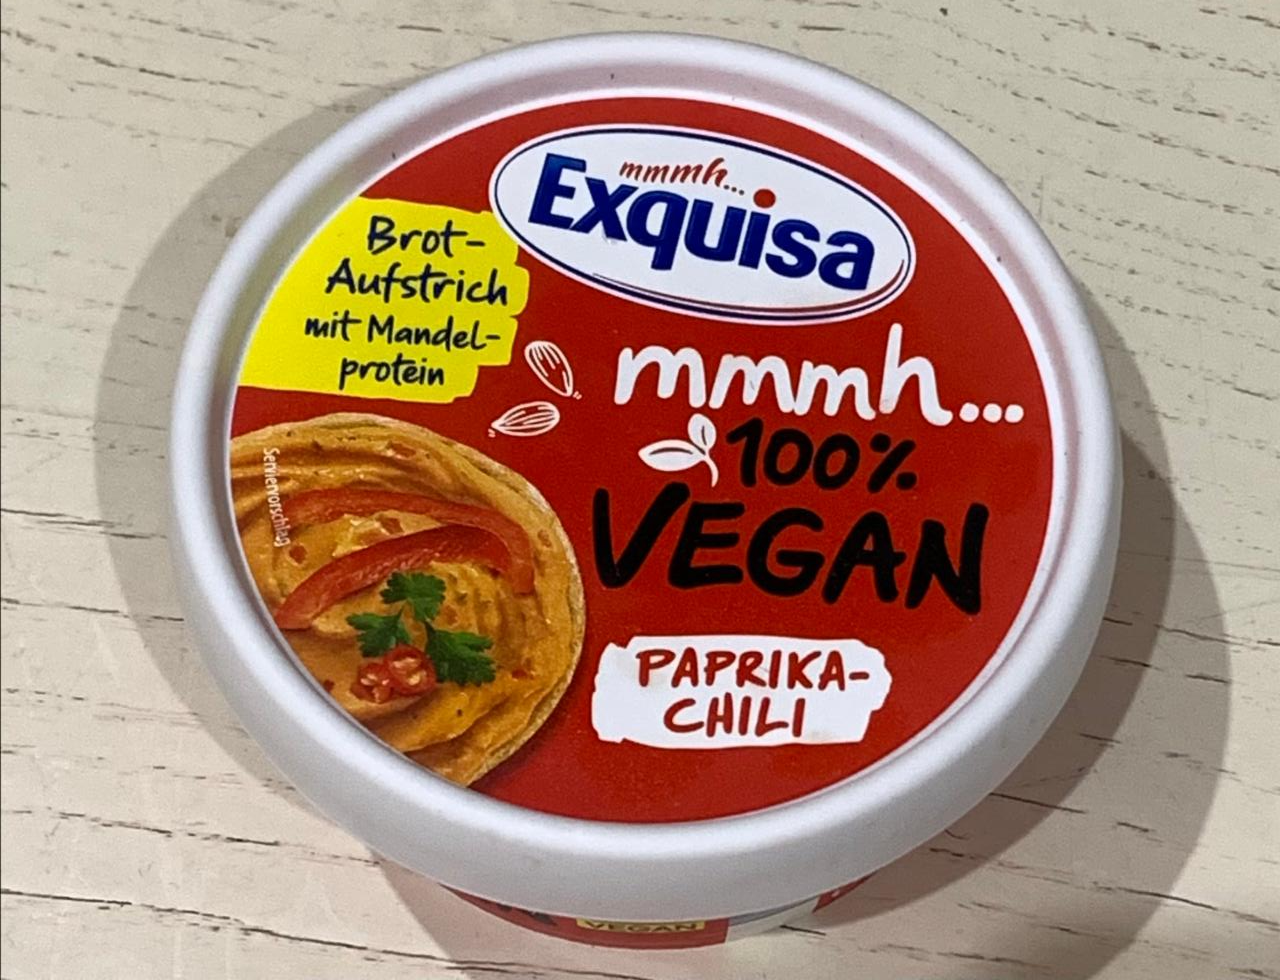 Фото - Намазка веганська Paprika-Chili 100% Vegan Exquisa